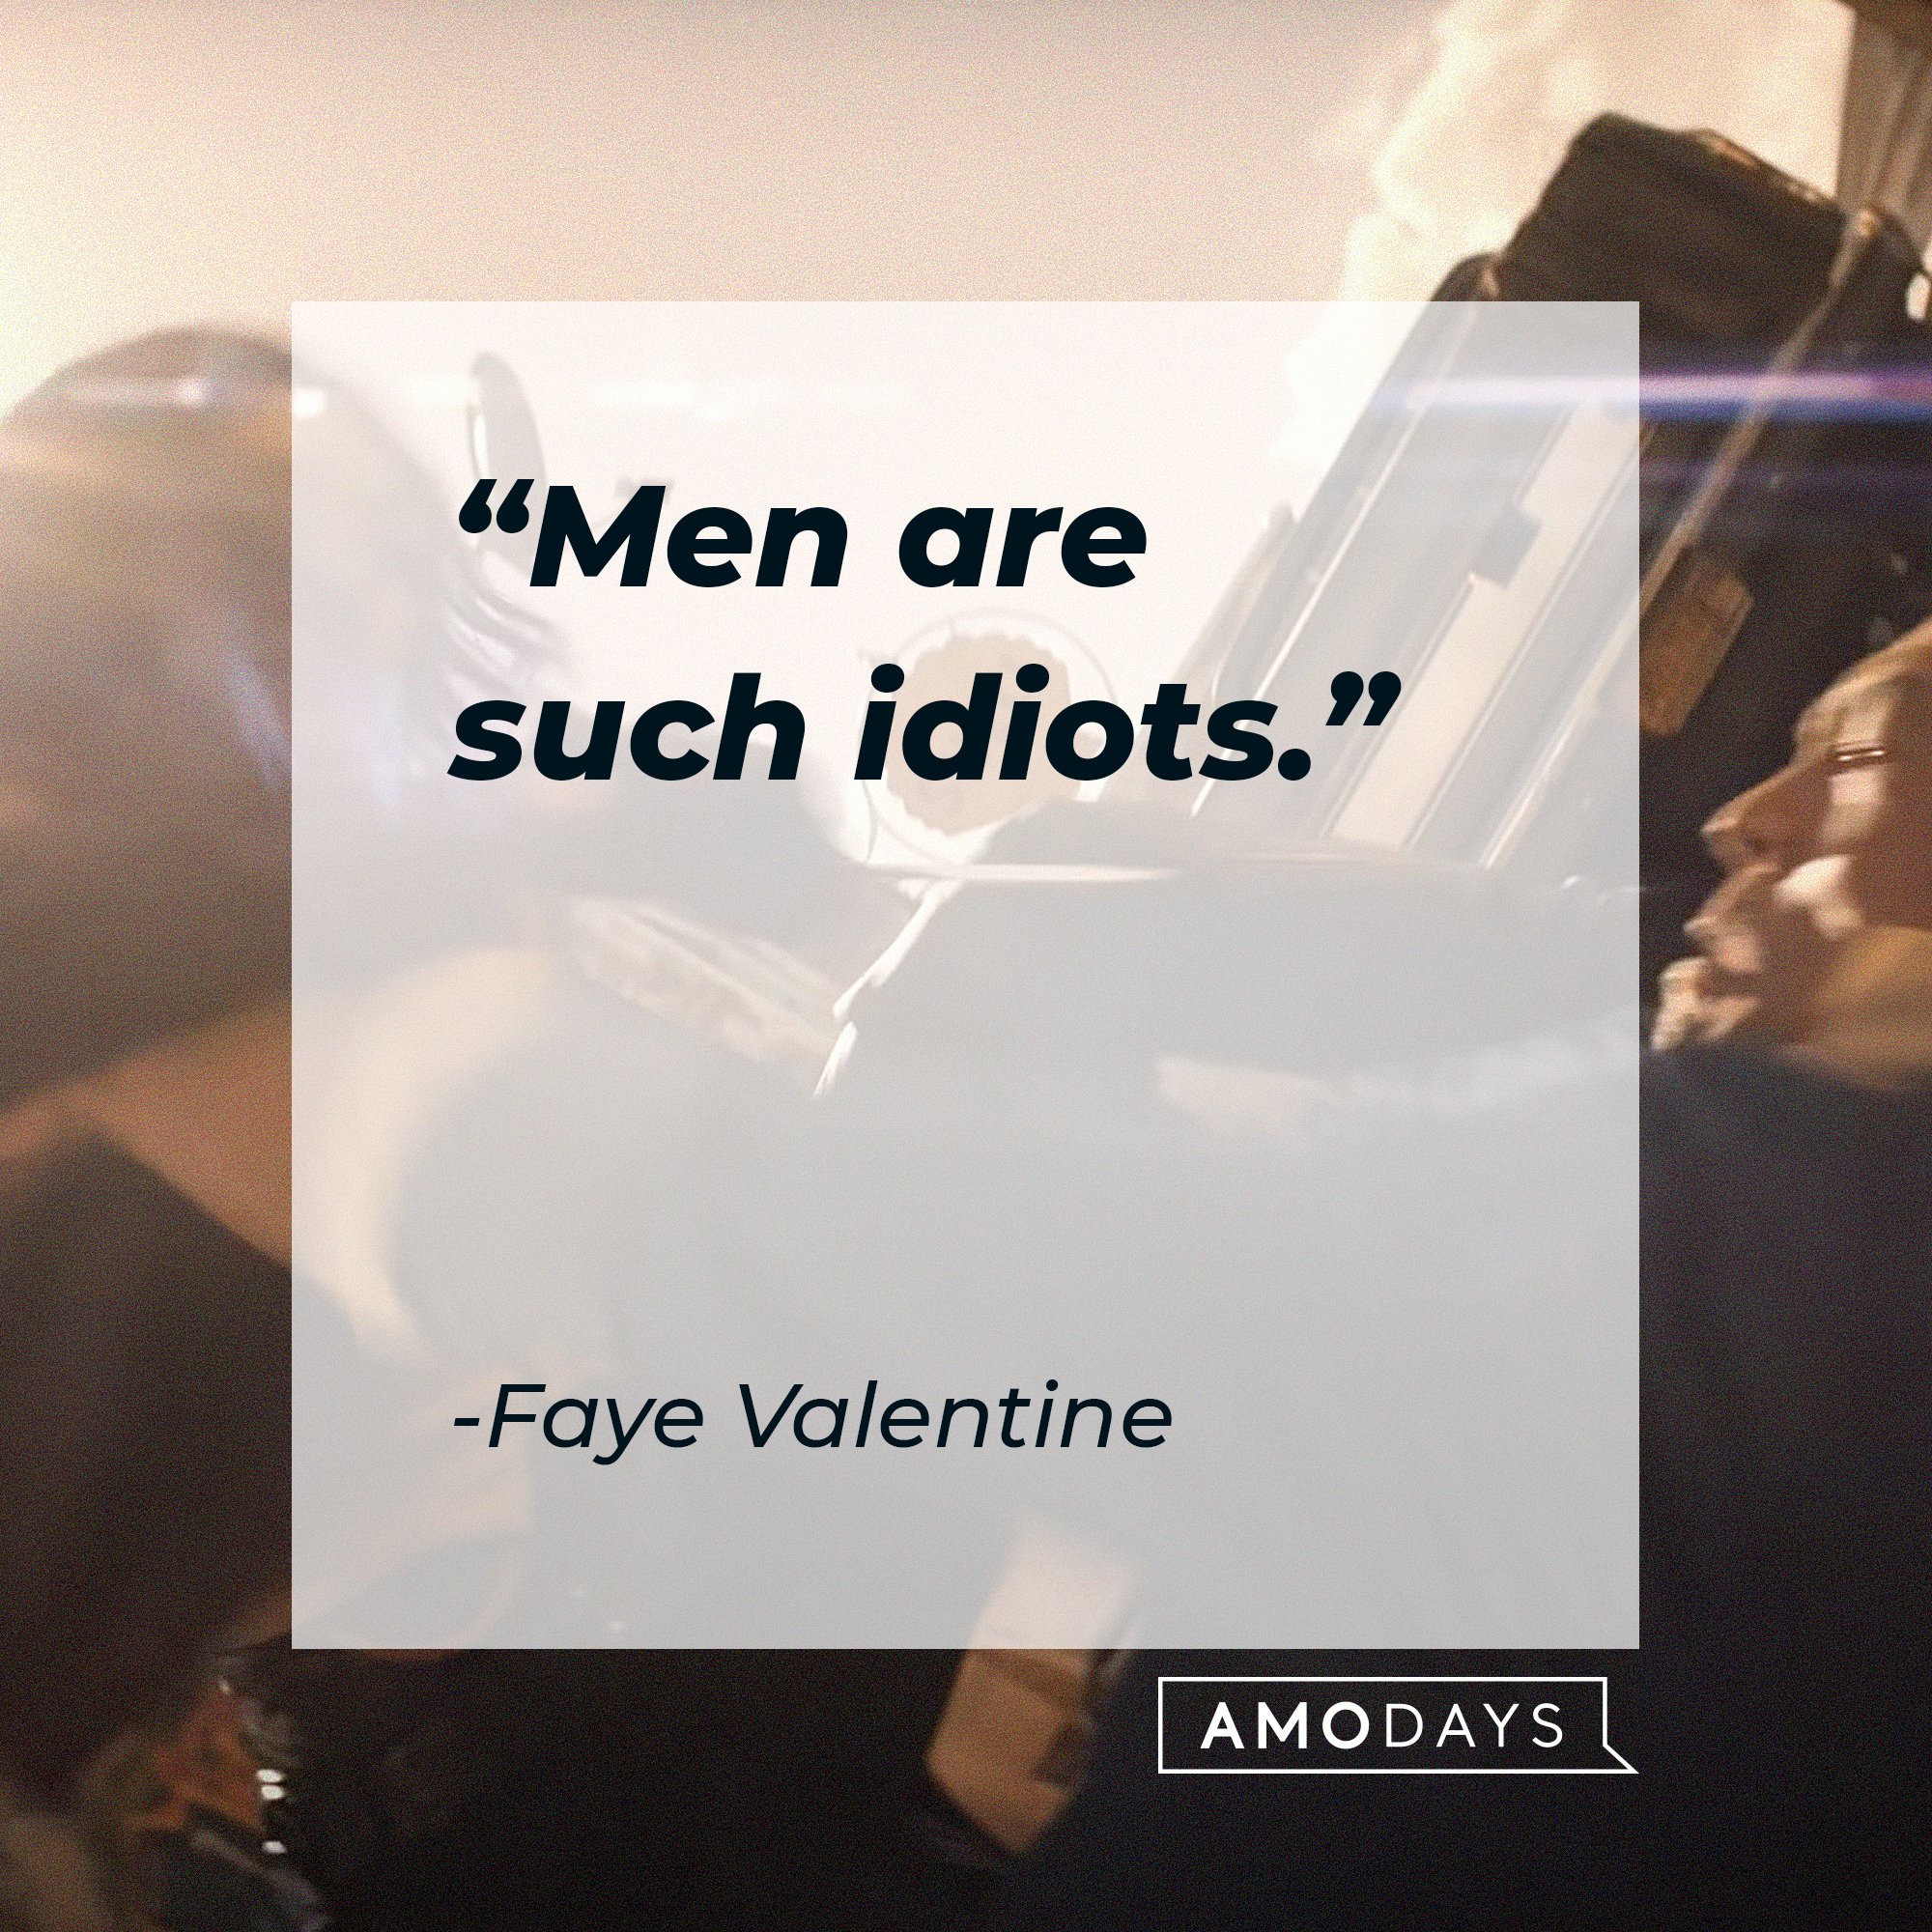 Faye Valentine’s quote: "Men are such idiots." | Image: AmoDays